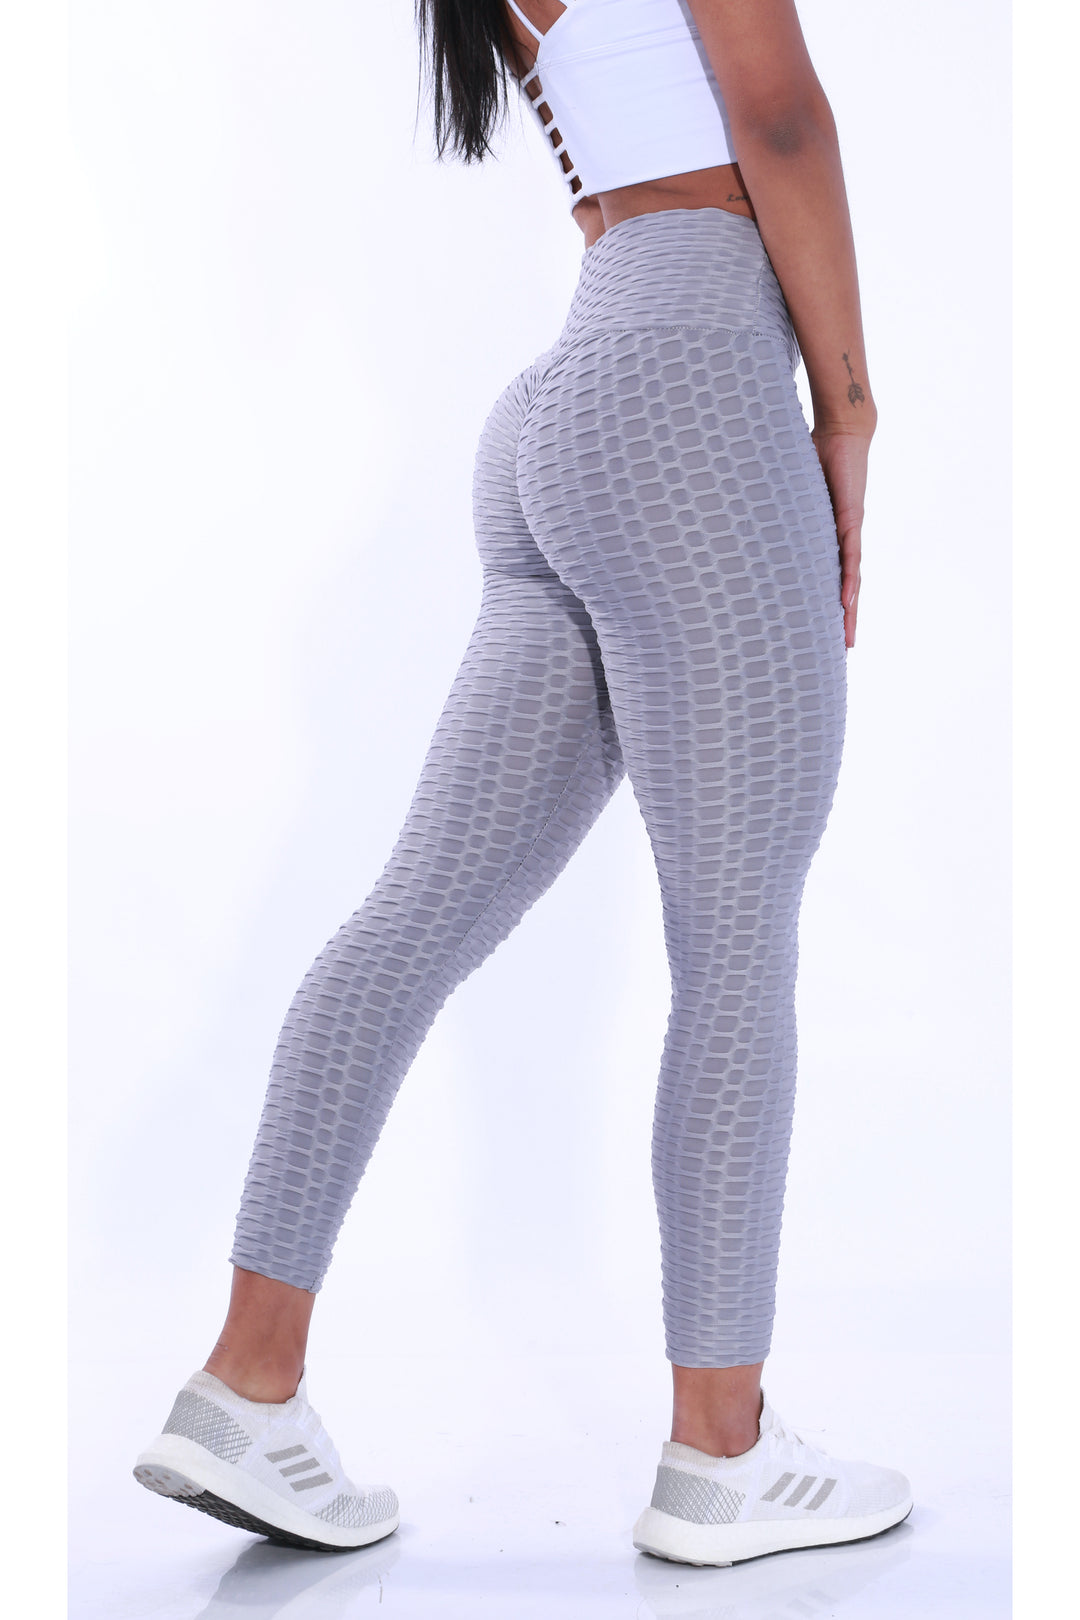 Shapewear TNG Scrunchies - Tik Tok style Anti cellulite leggings - Greyaos-init aos-animate